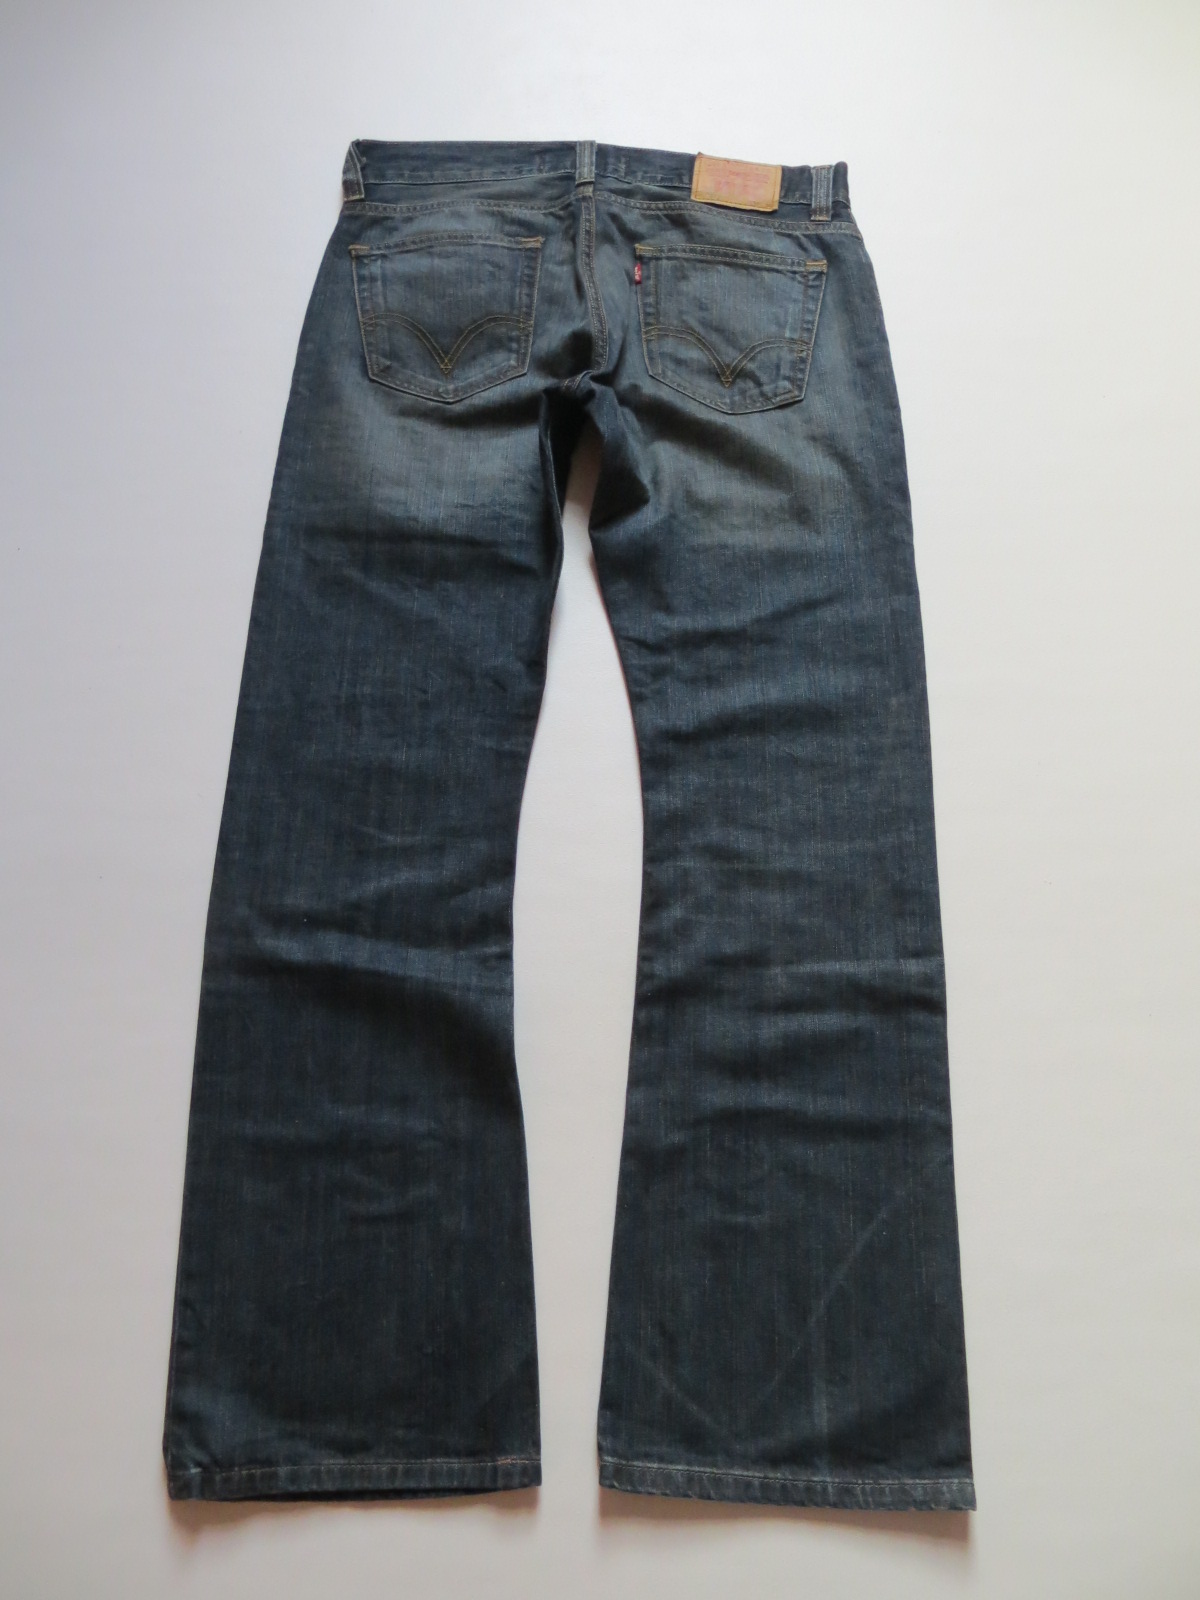 Levi's 512 Bootcut Jeans Trousers, w 36/L 34, Dark Vintage Denim, Very ...